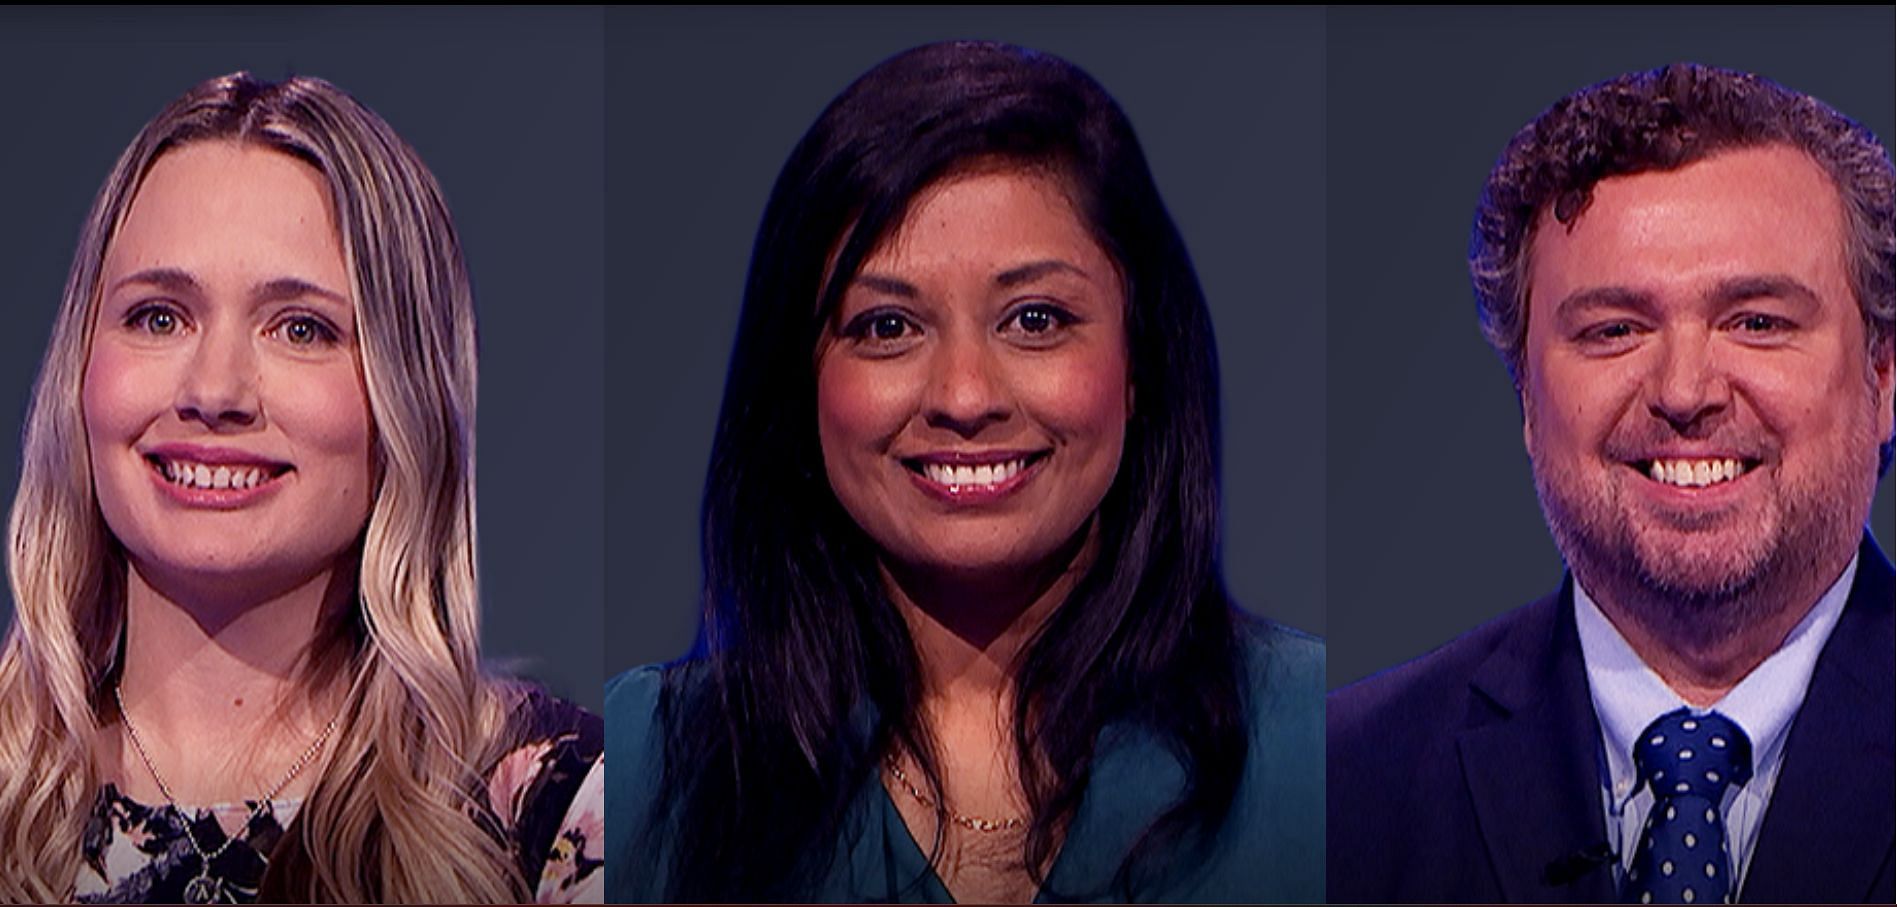 The 3 contestants from Jeopardy! (Image via Jeopardy.com)